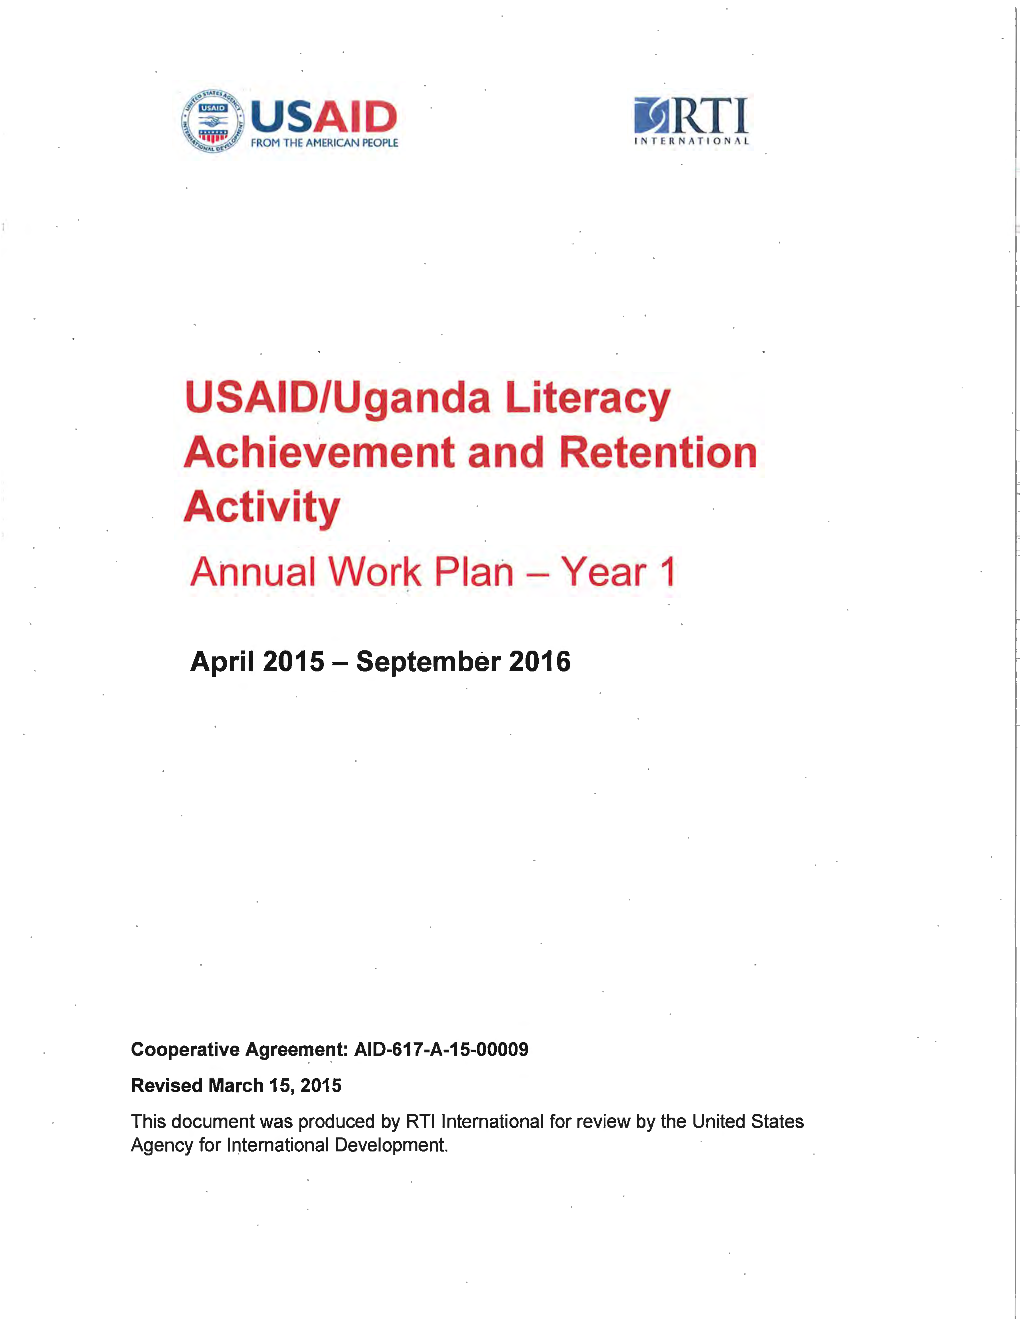 USAID/Uganda Literacy Achievement and Retention Activity Annual Work Plan - Year 1